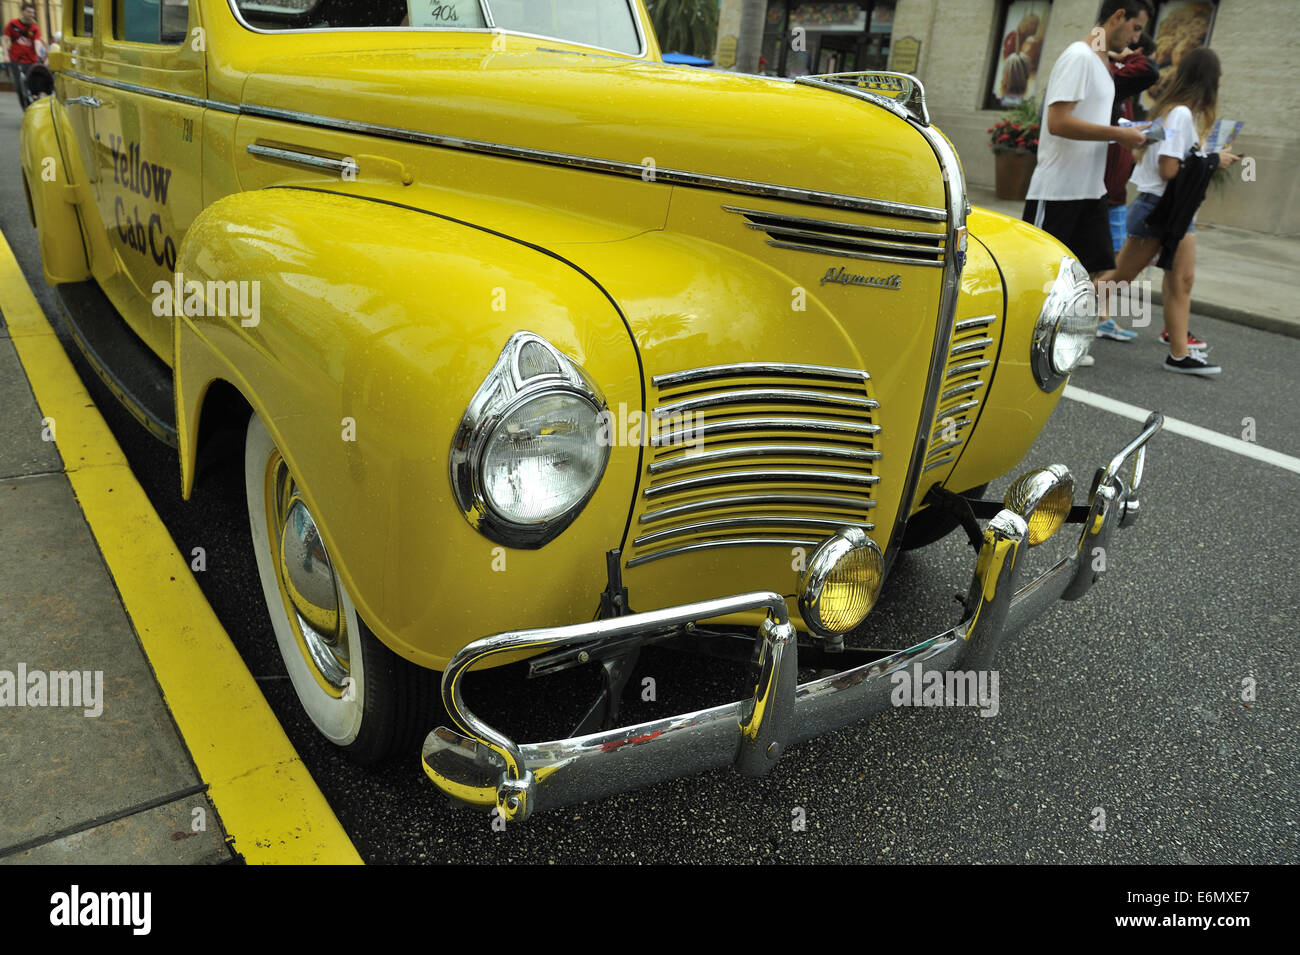 Vintage Chrysler Plymouth Yellow cab taxi, Universal Orlando Resort, Orlando, Florida, USA Stock Photo